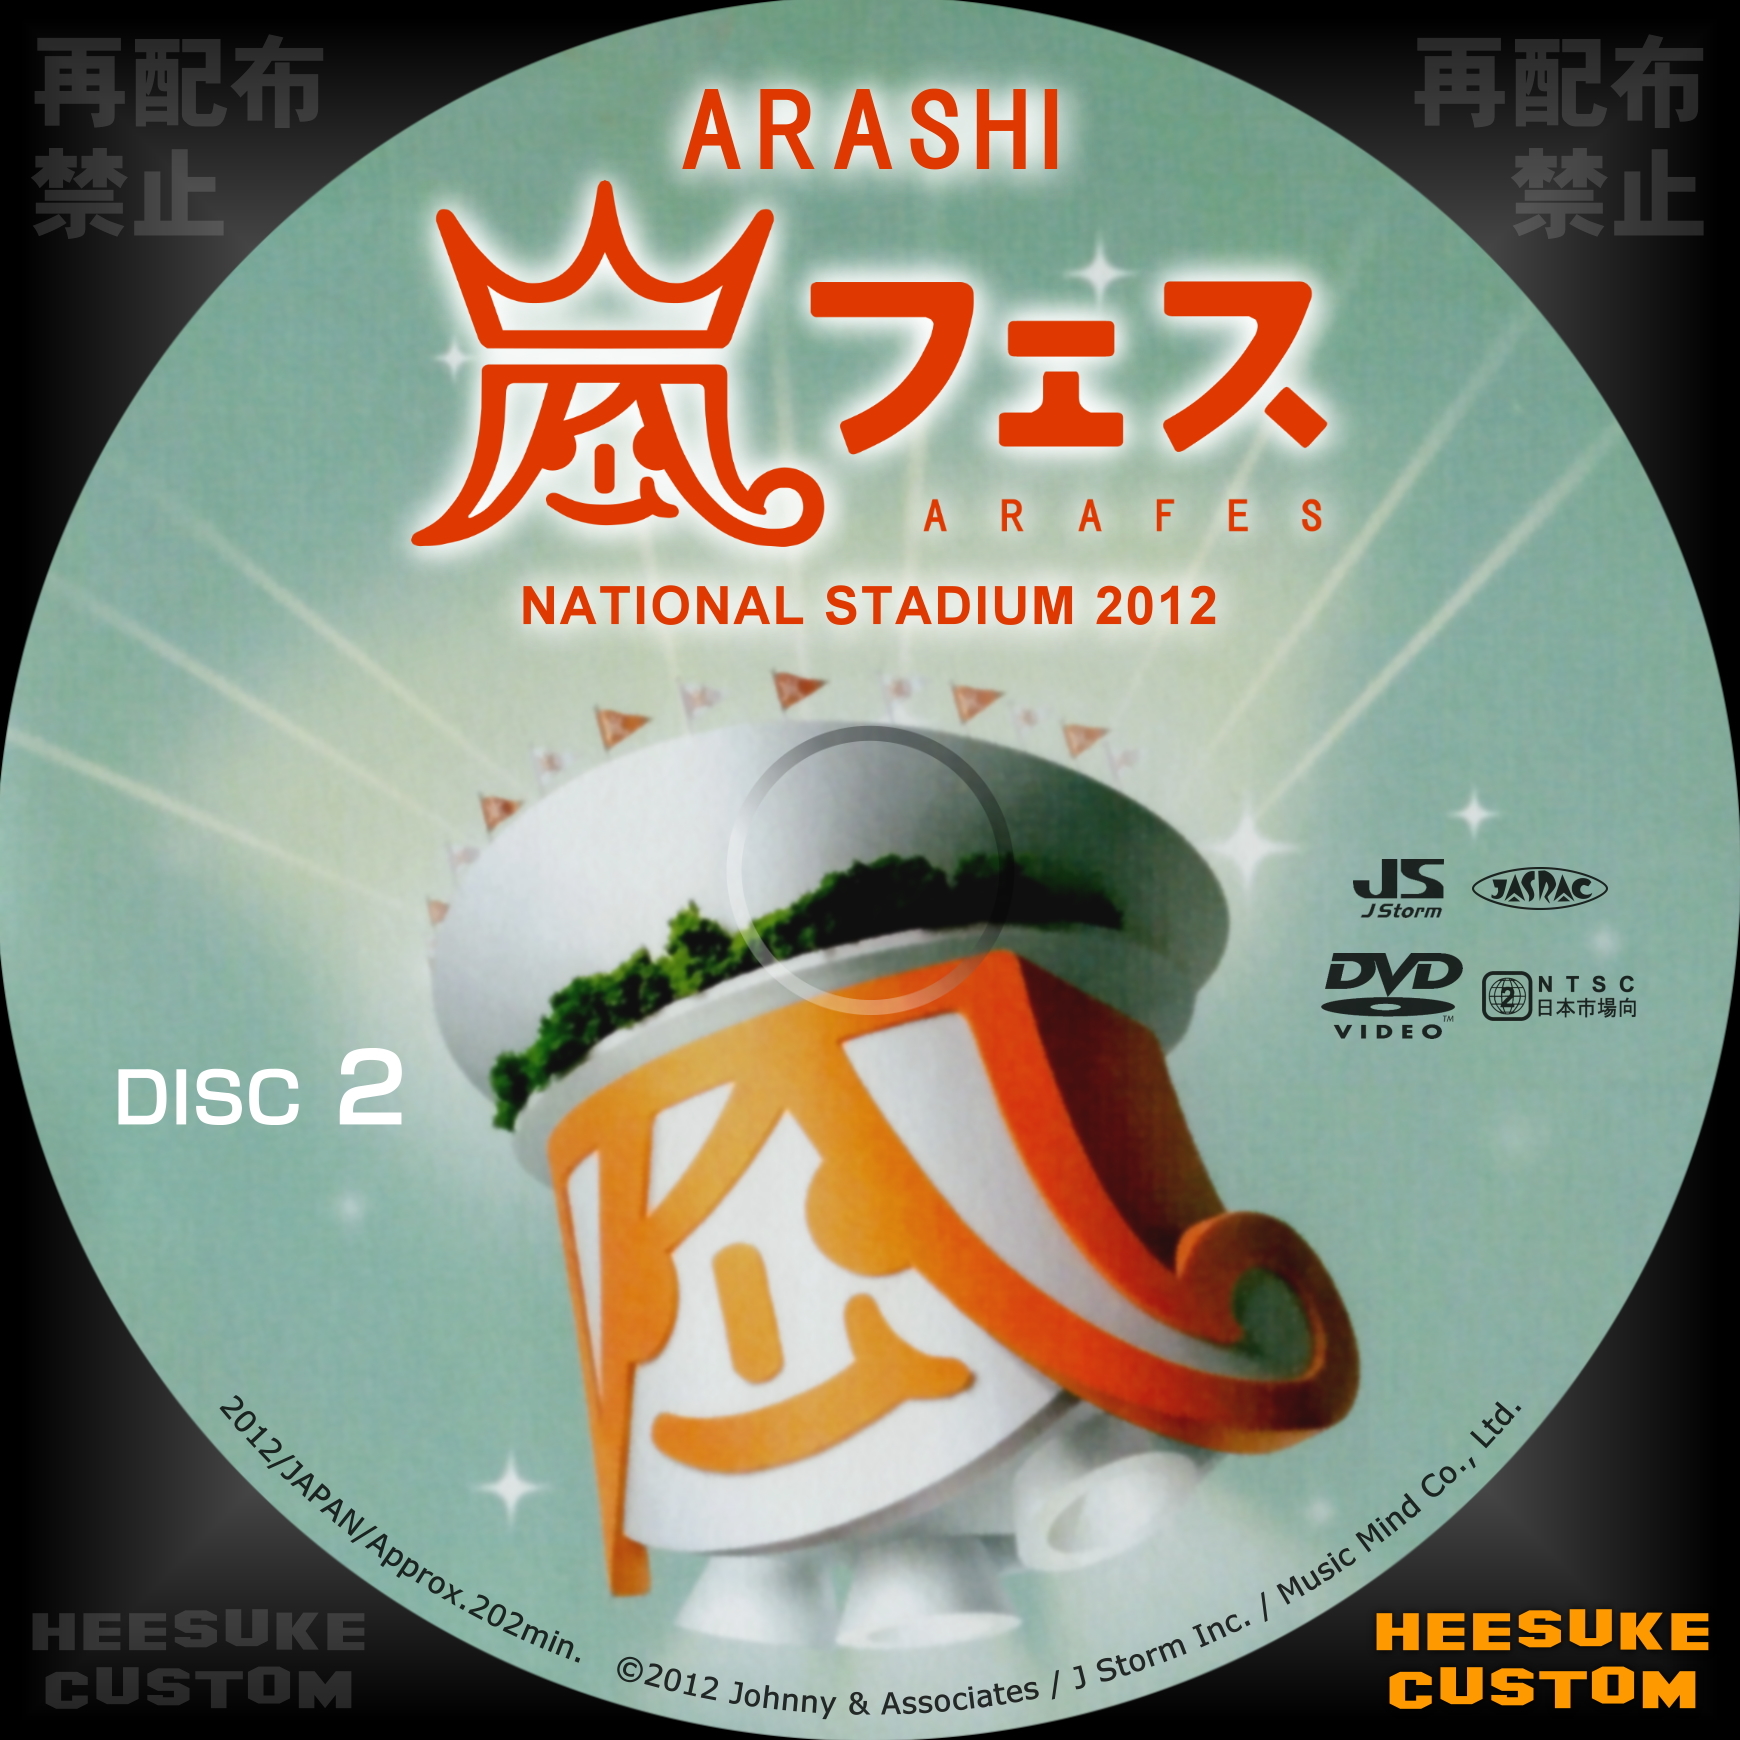 ARASHI 嵐フェス NATIONAL STADIUM 2012 DVD - HEESUKEのあれこれ倉庫 ラベル支店